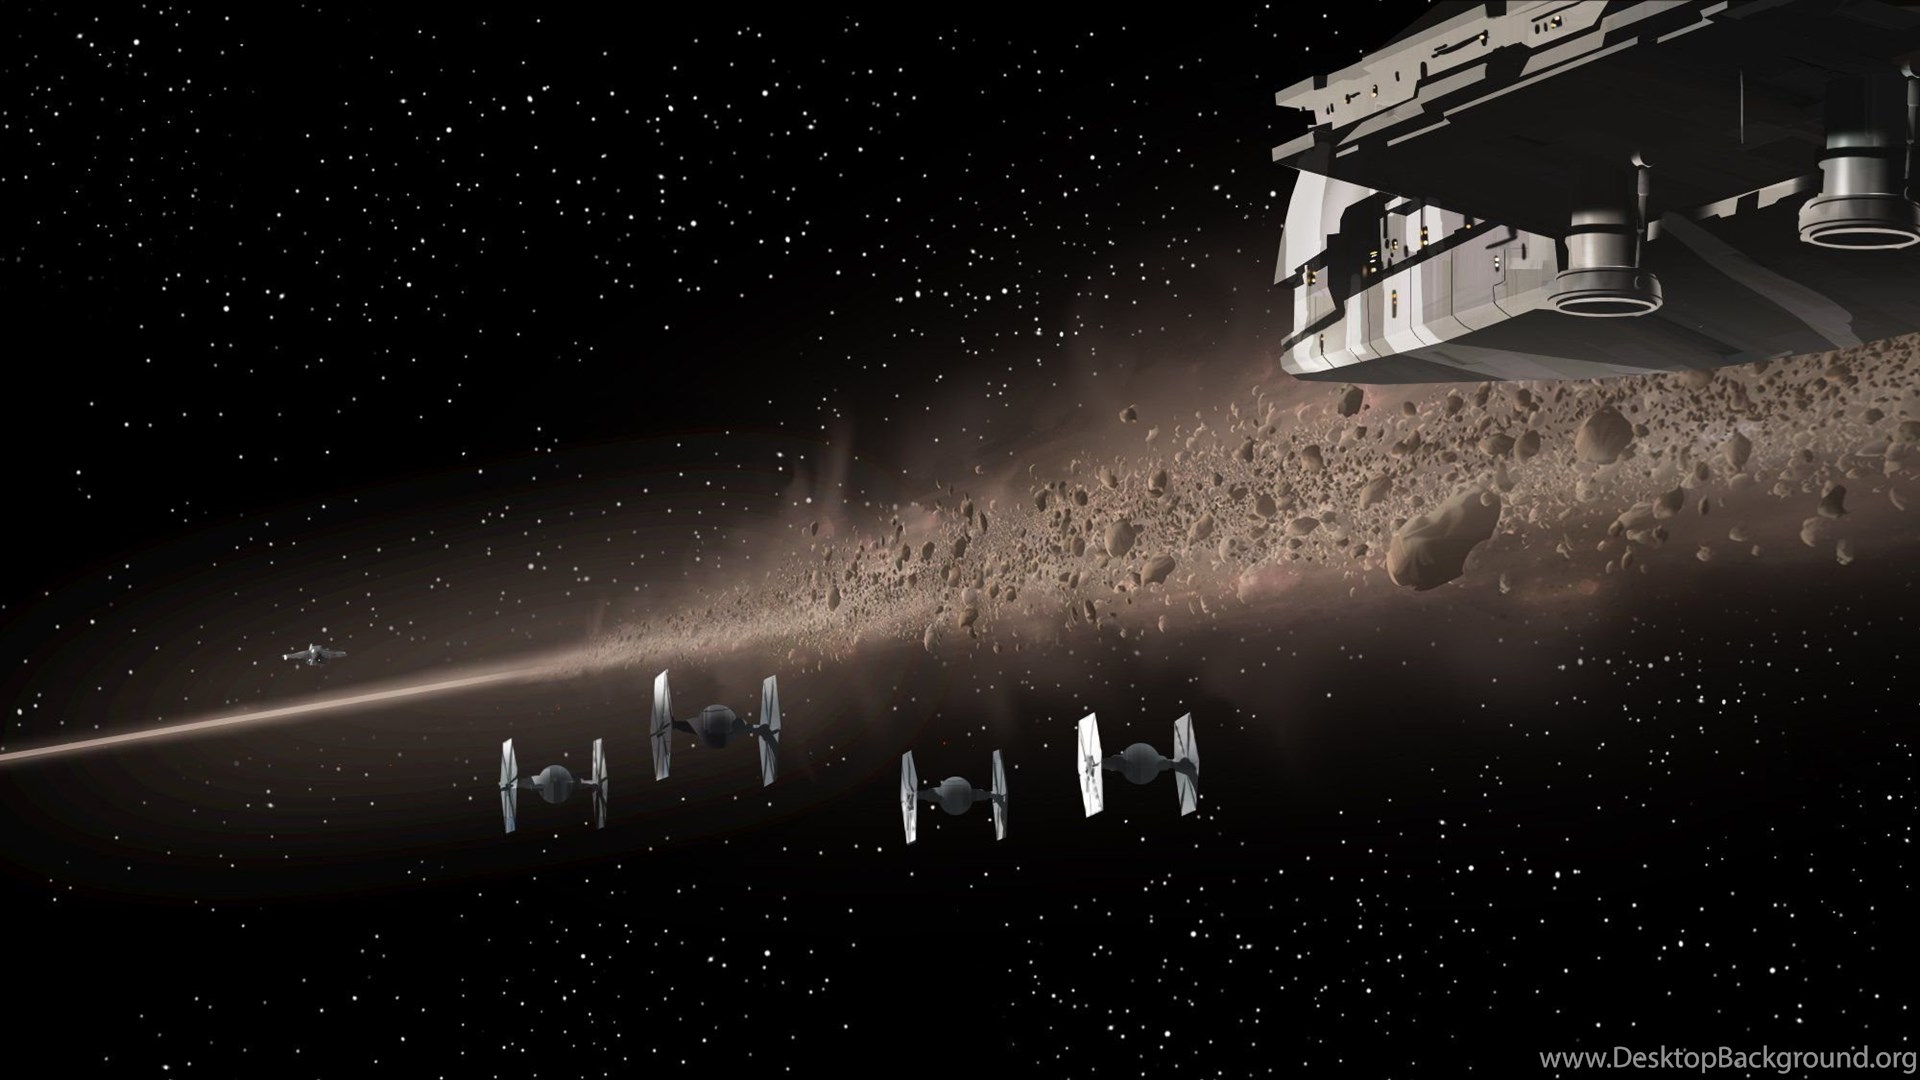 TIE FIGHTER Star Wars Futuristic Spaceship Space Sci fi Wallpaper. Desktop Background